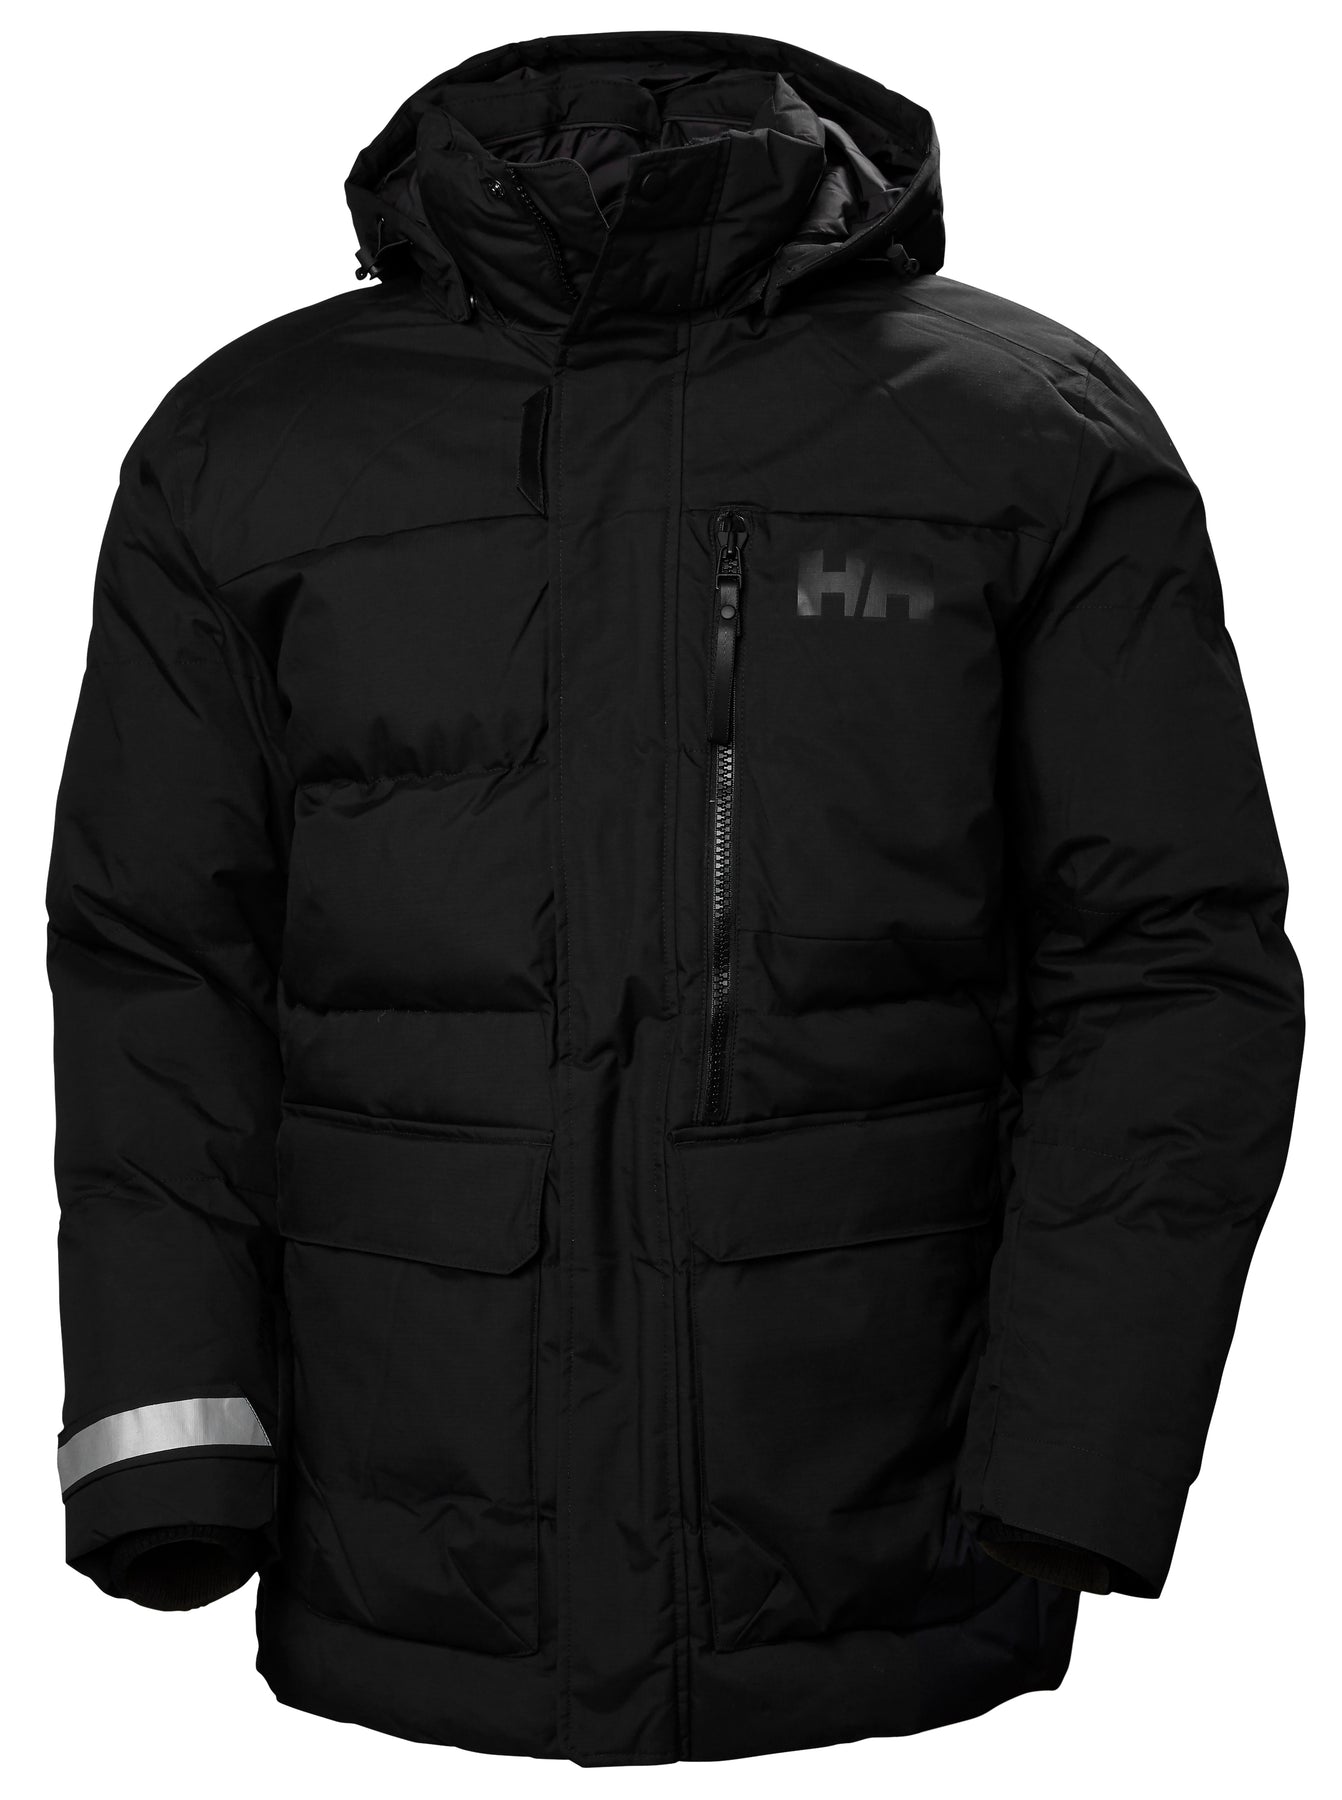 Tromsoe Jacket - Black